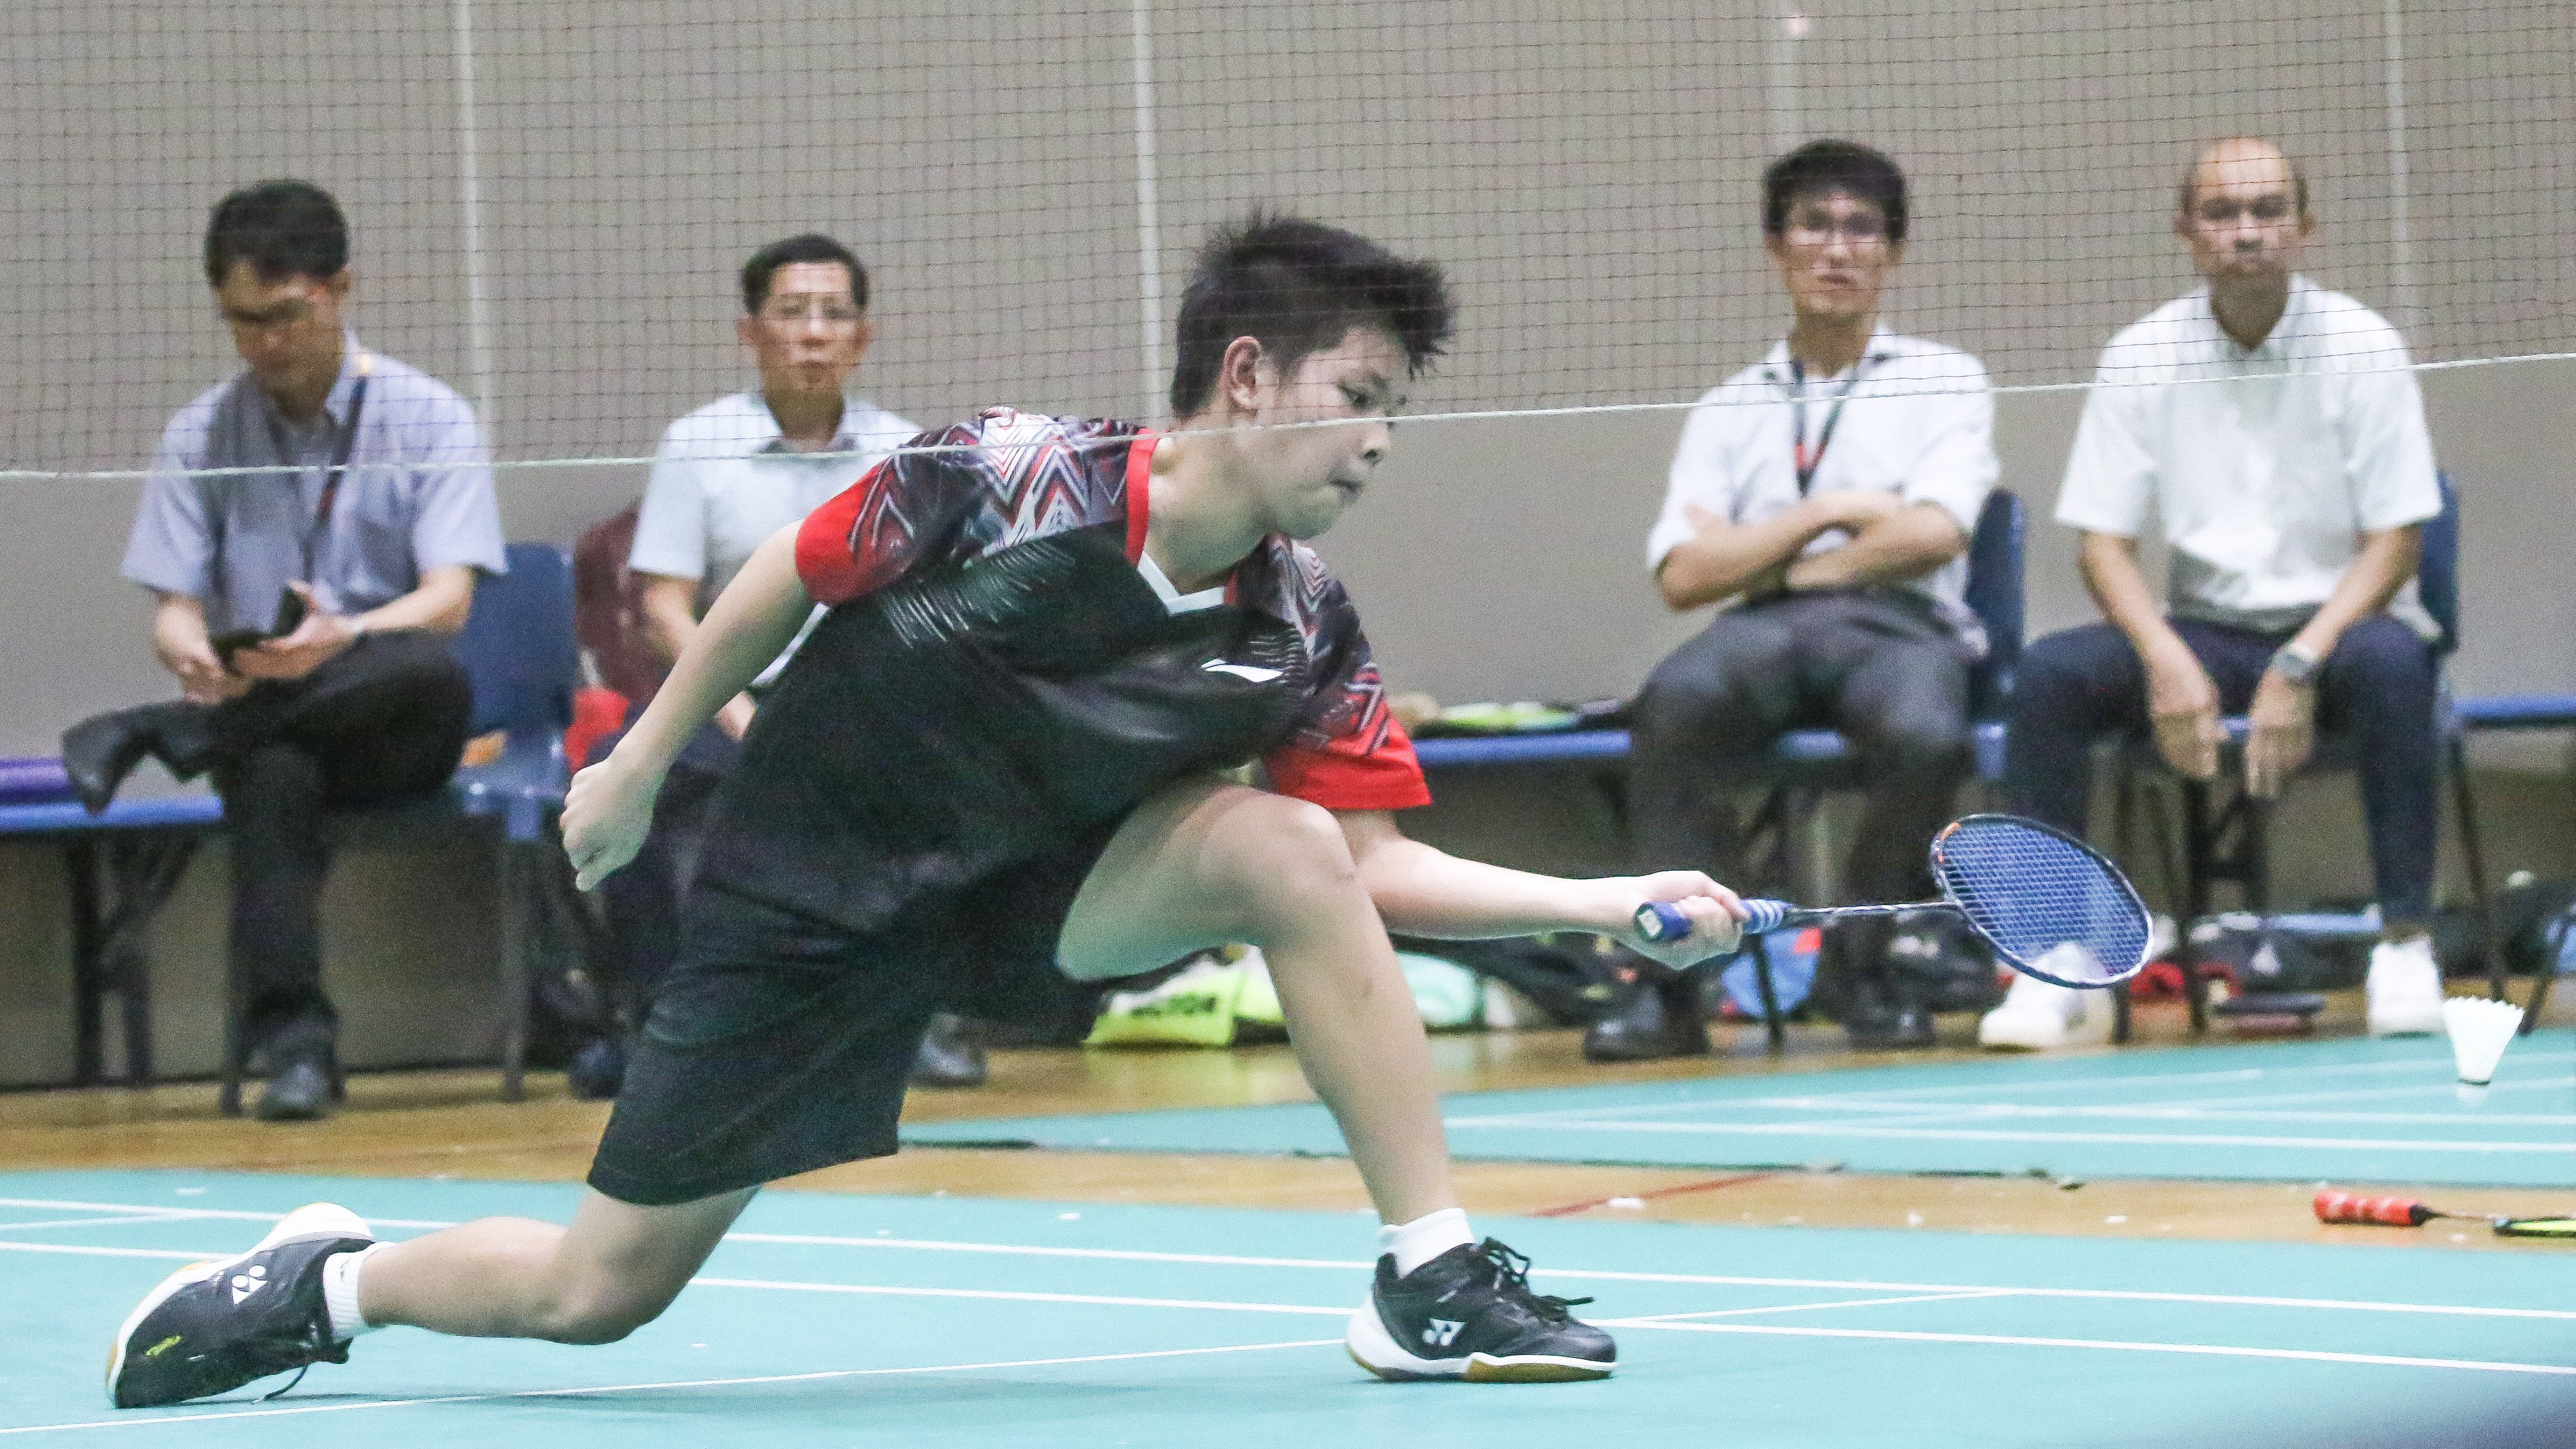 2023-05-17_Badminton_By Chin KK_IFP_2032_edited